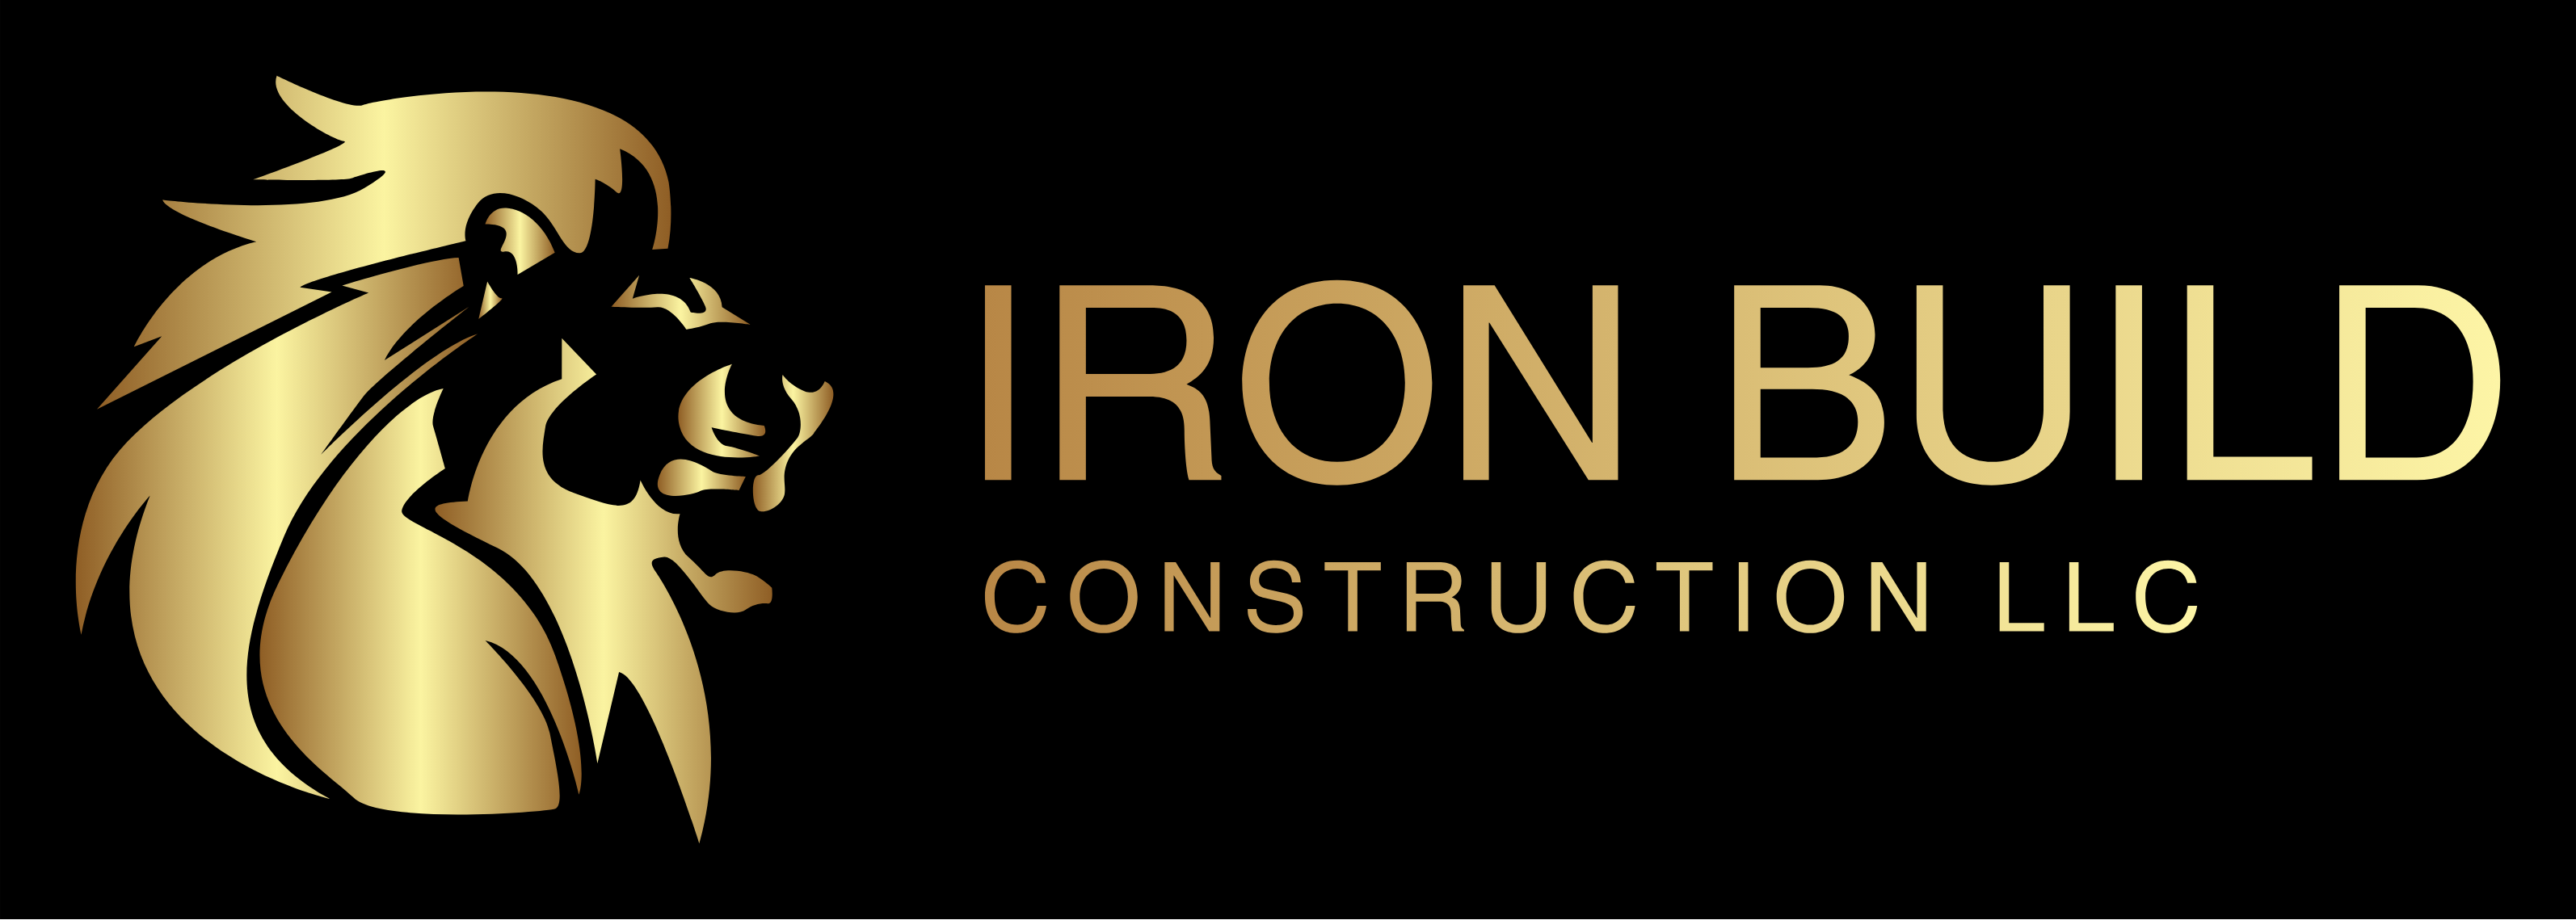 Iron Build Construction, LLC Logo